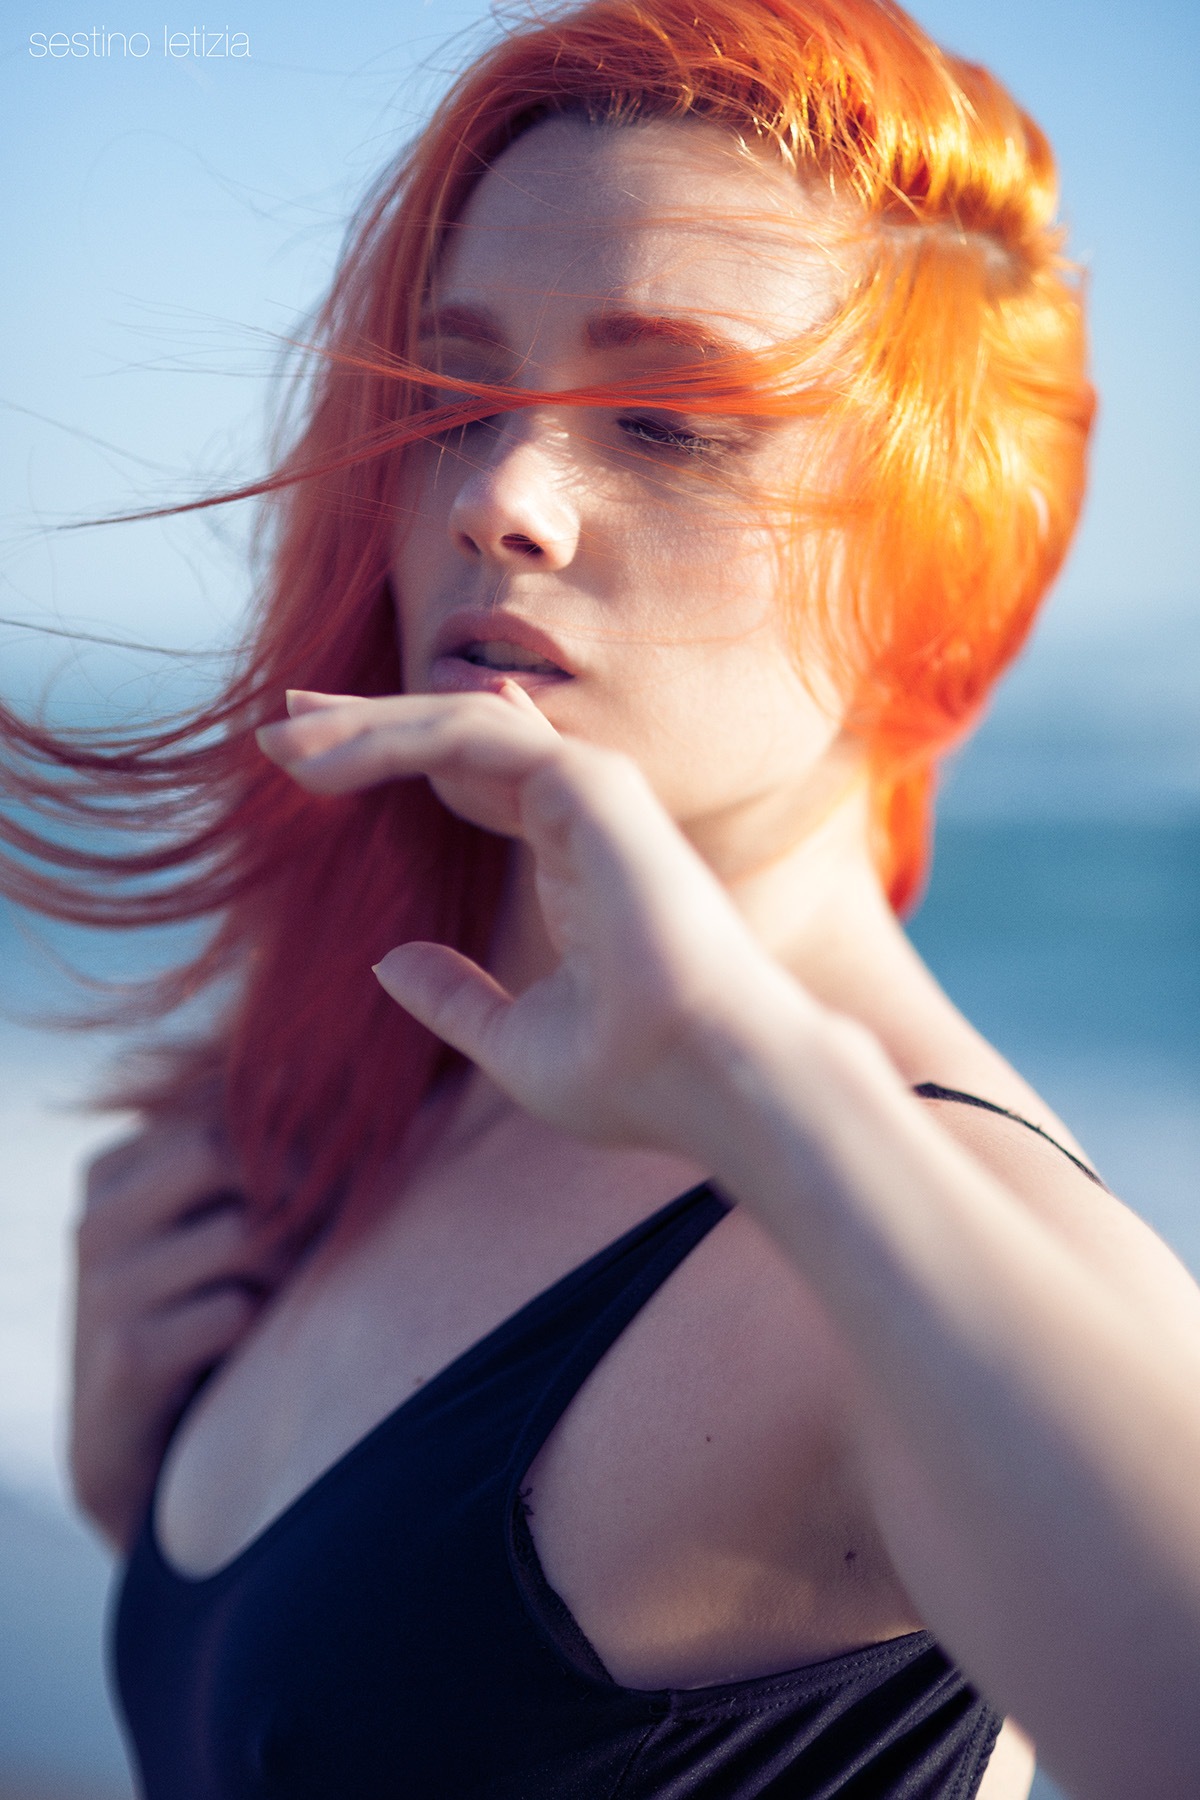 Verdiana Meneghini red head red hair pic photo model sea